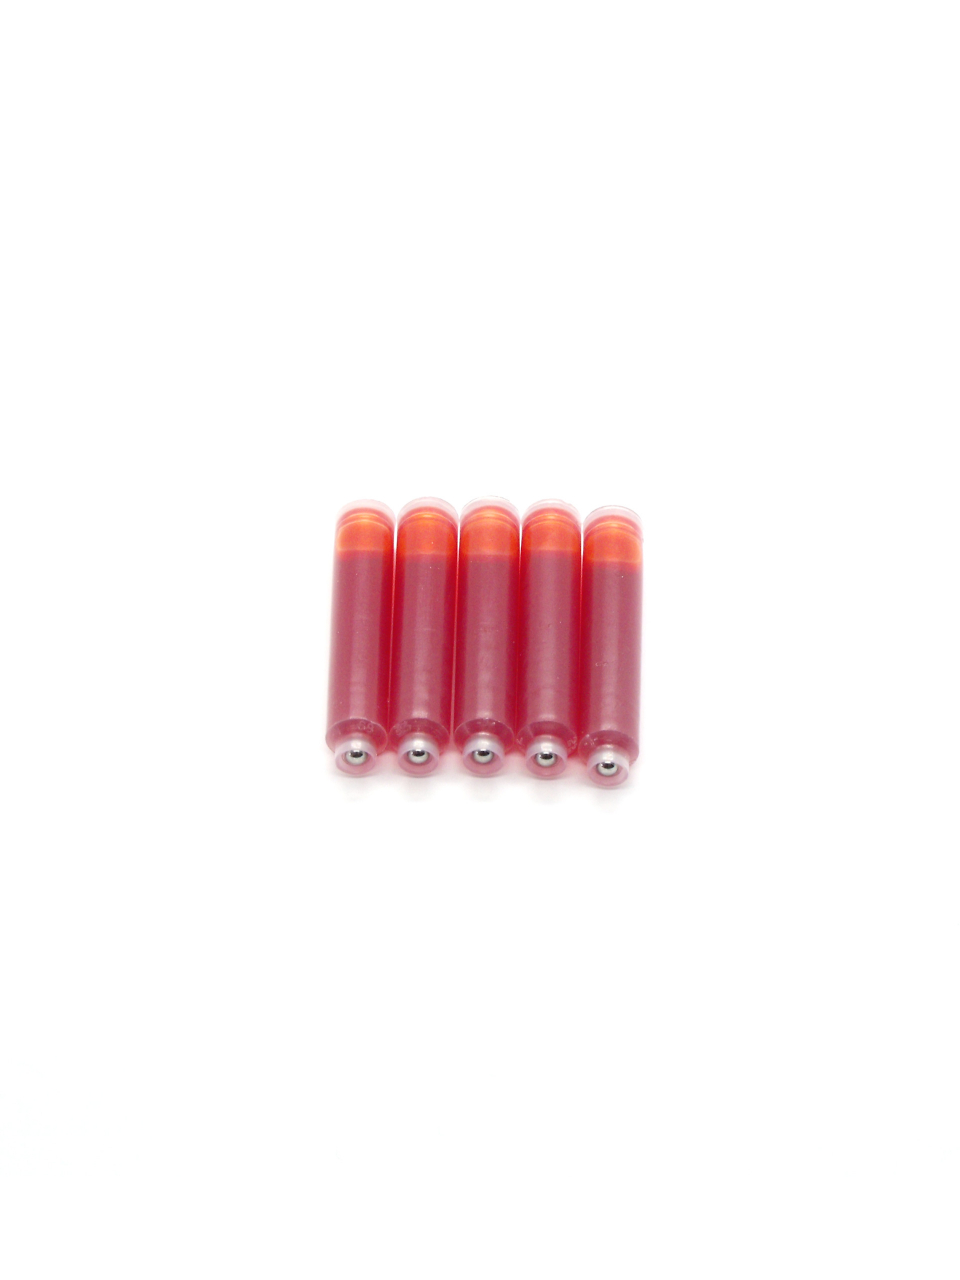 Top Ink Cartridges For Taccia Fountain Pens (Orange)